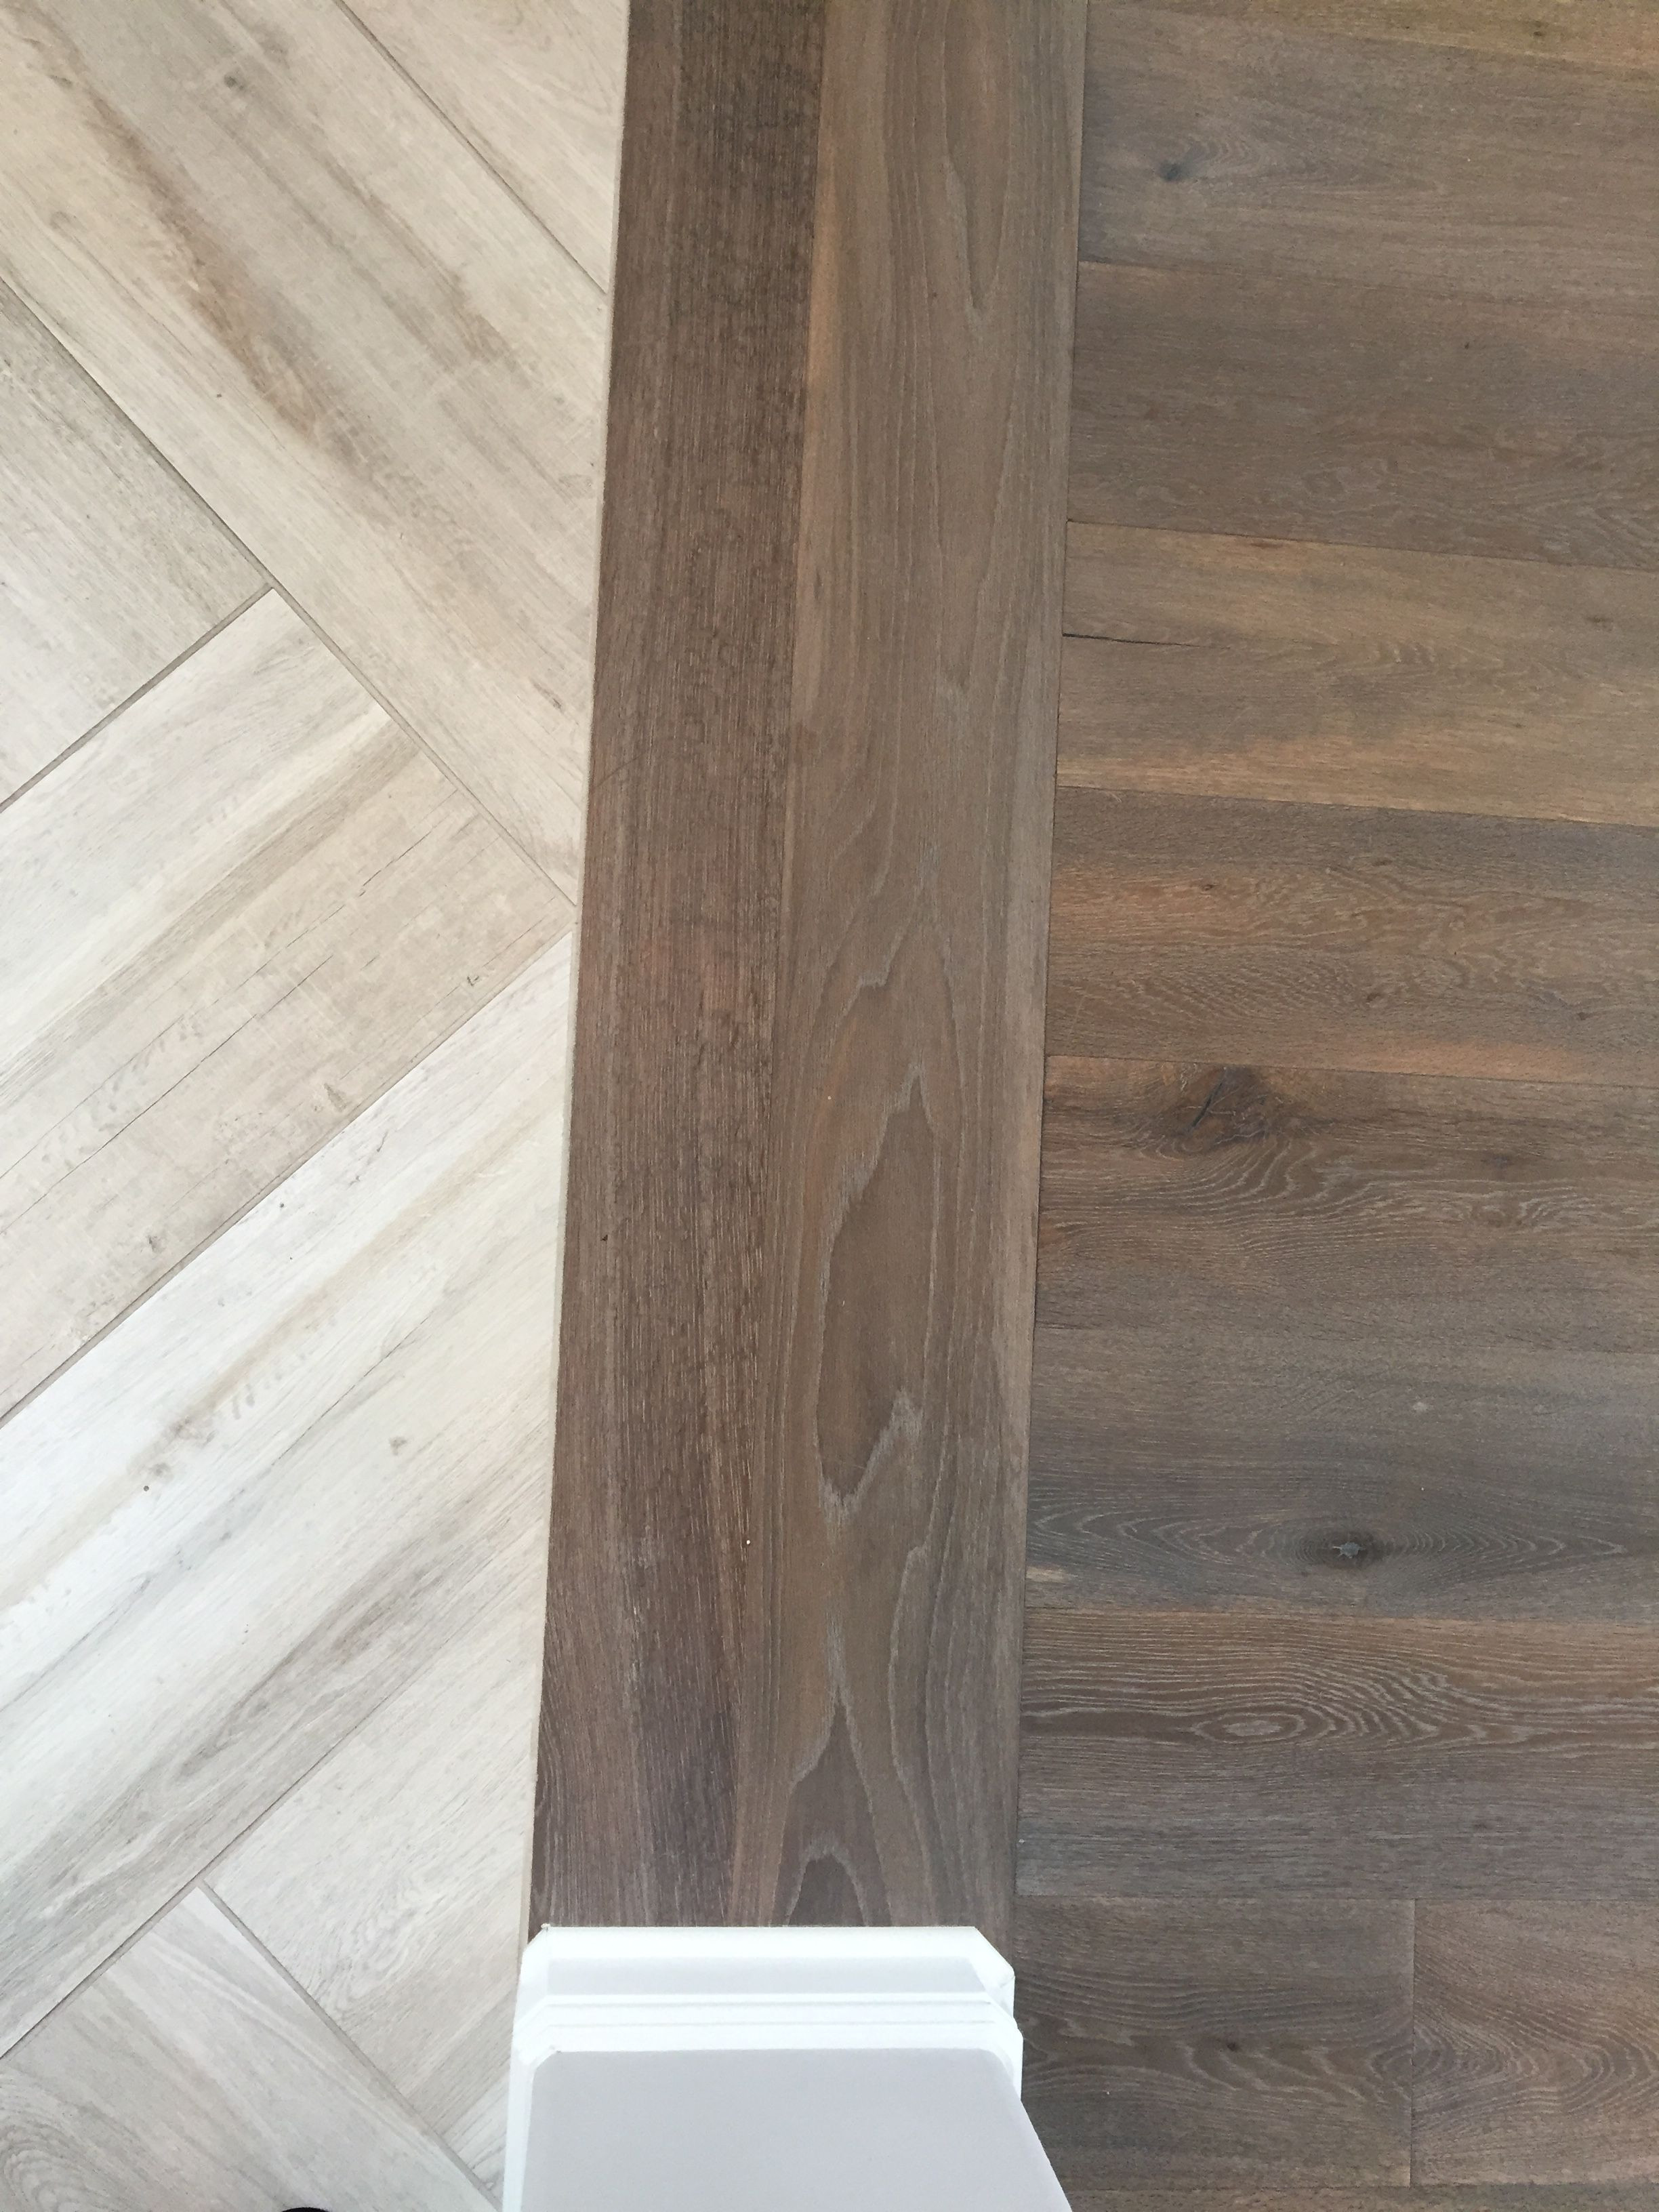 Grey Hardwood Floors White Cabinets Of Floor Transition Laminate to Herringbone Tile Pattern Model Pertaining to Floor Transition Laminate to Herringbone Tile Pattern